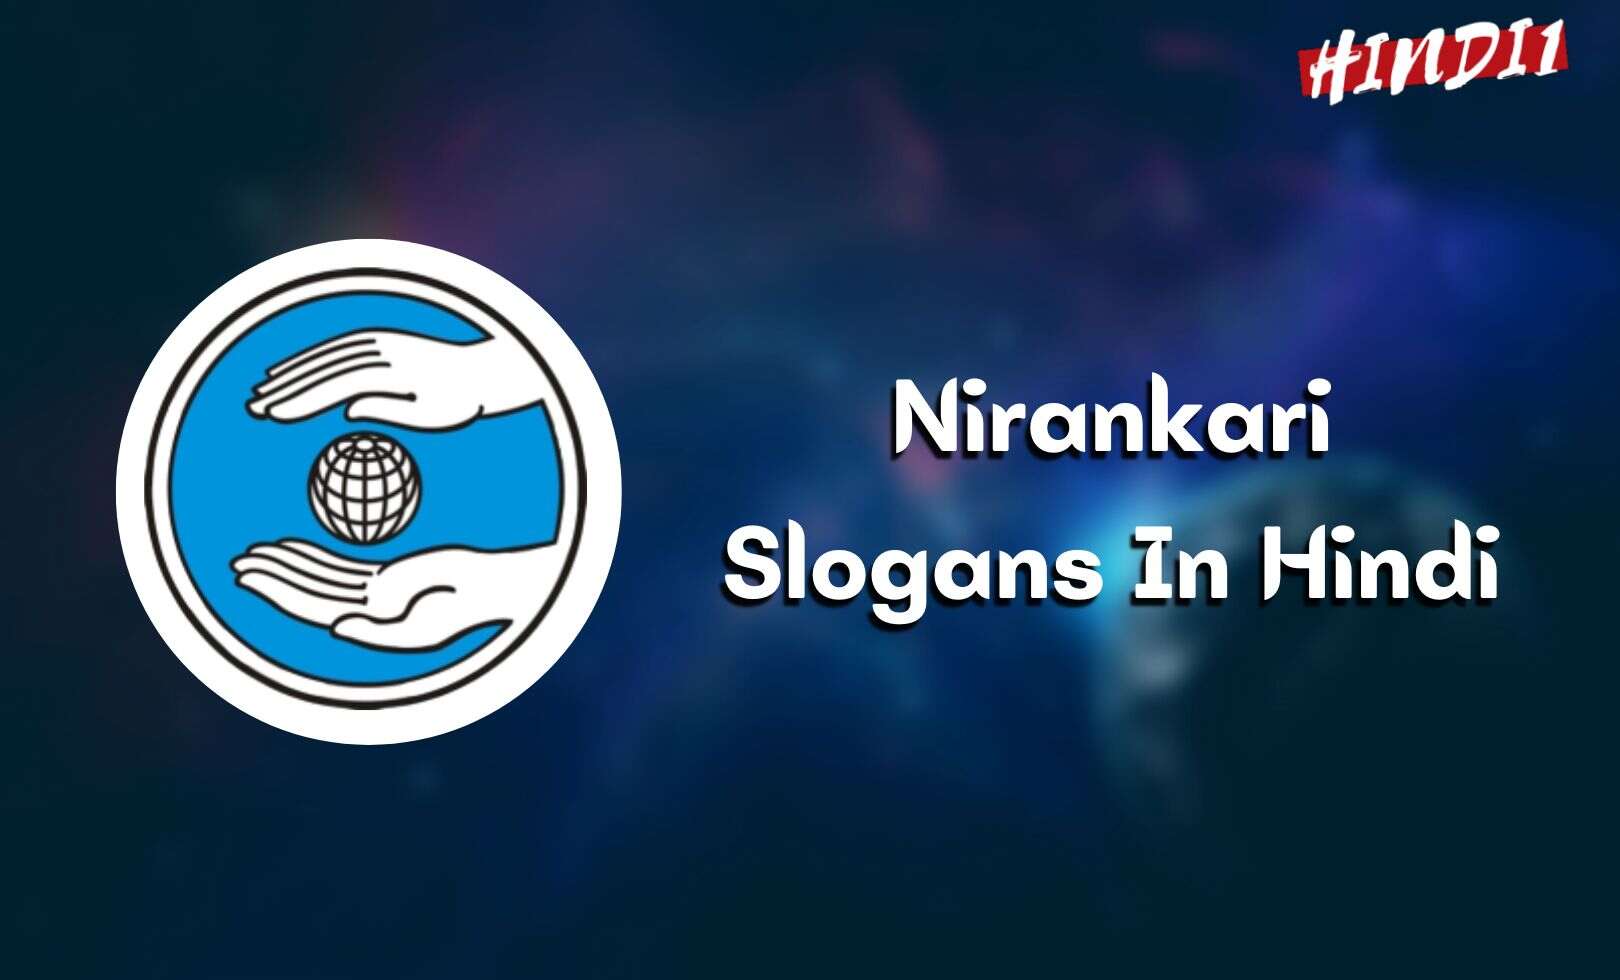 Nirankari Slogans In Hindi [80+ निरंकारी स्लोगन]